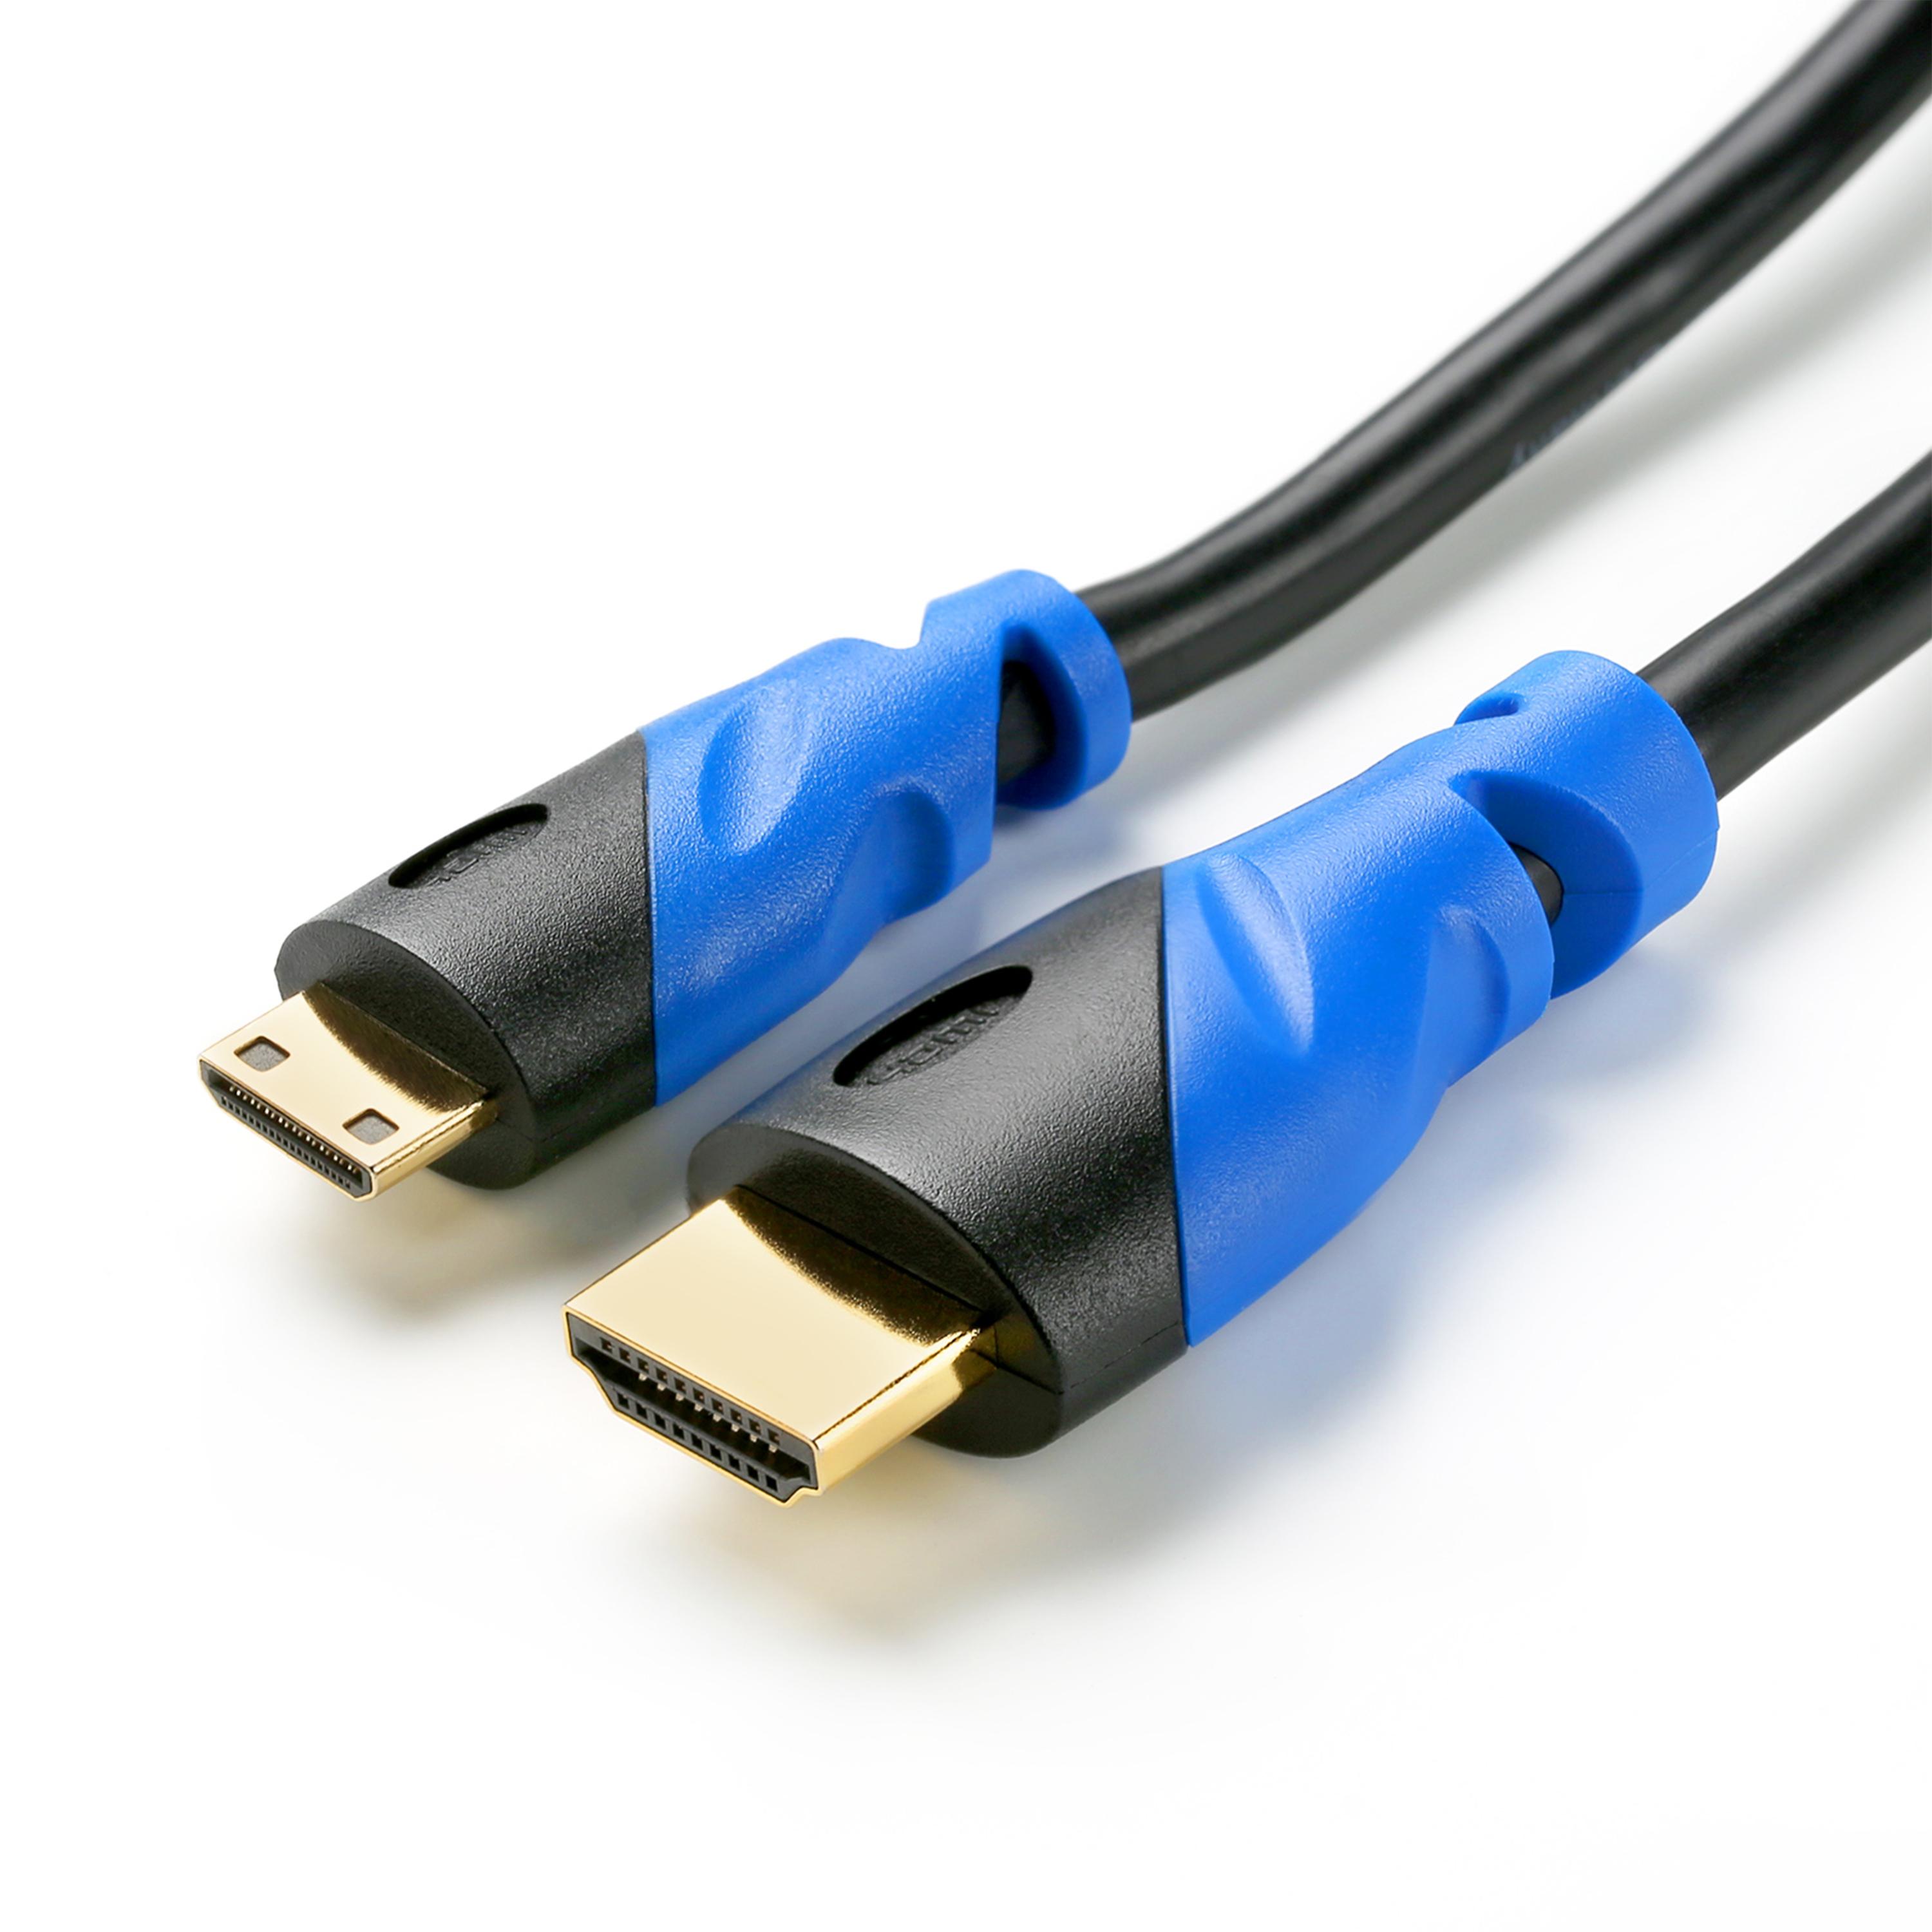 MiniHDMI 2.0 schwarz/blau 3m CSL HDMI Kabel, Kabel,